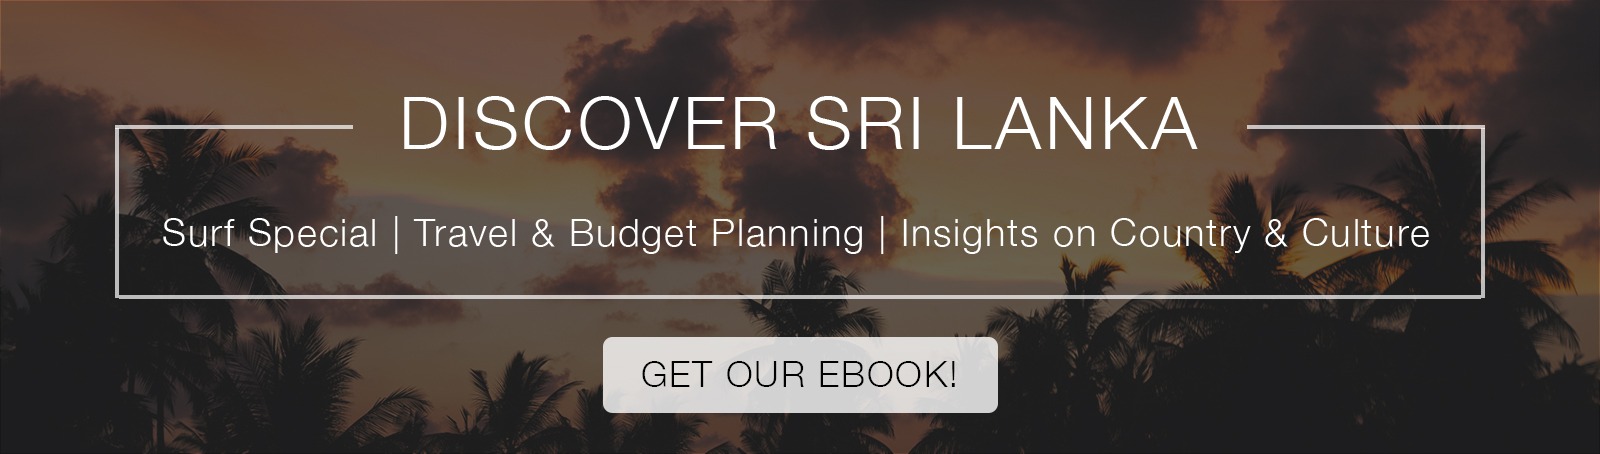 Discover Sri Lanka eBook